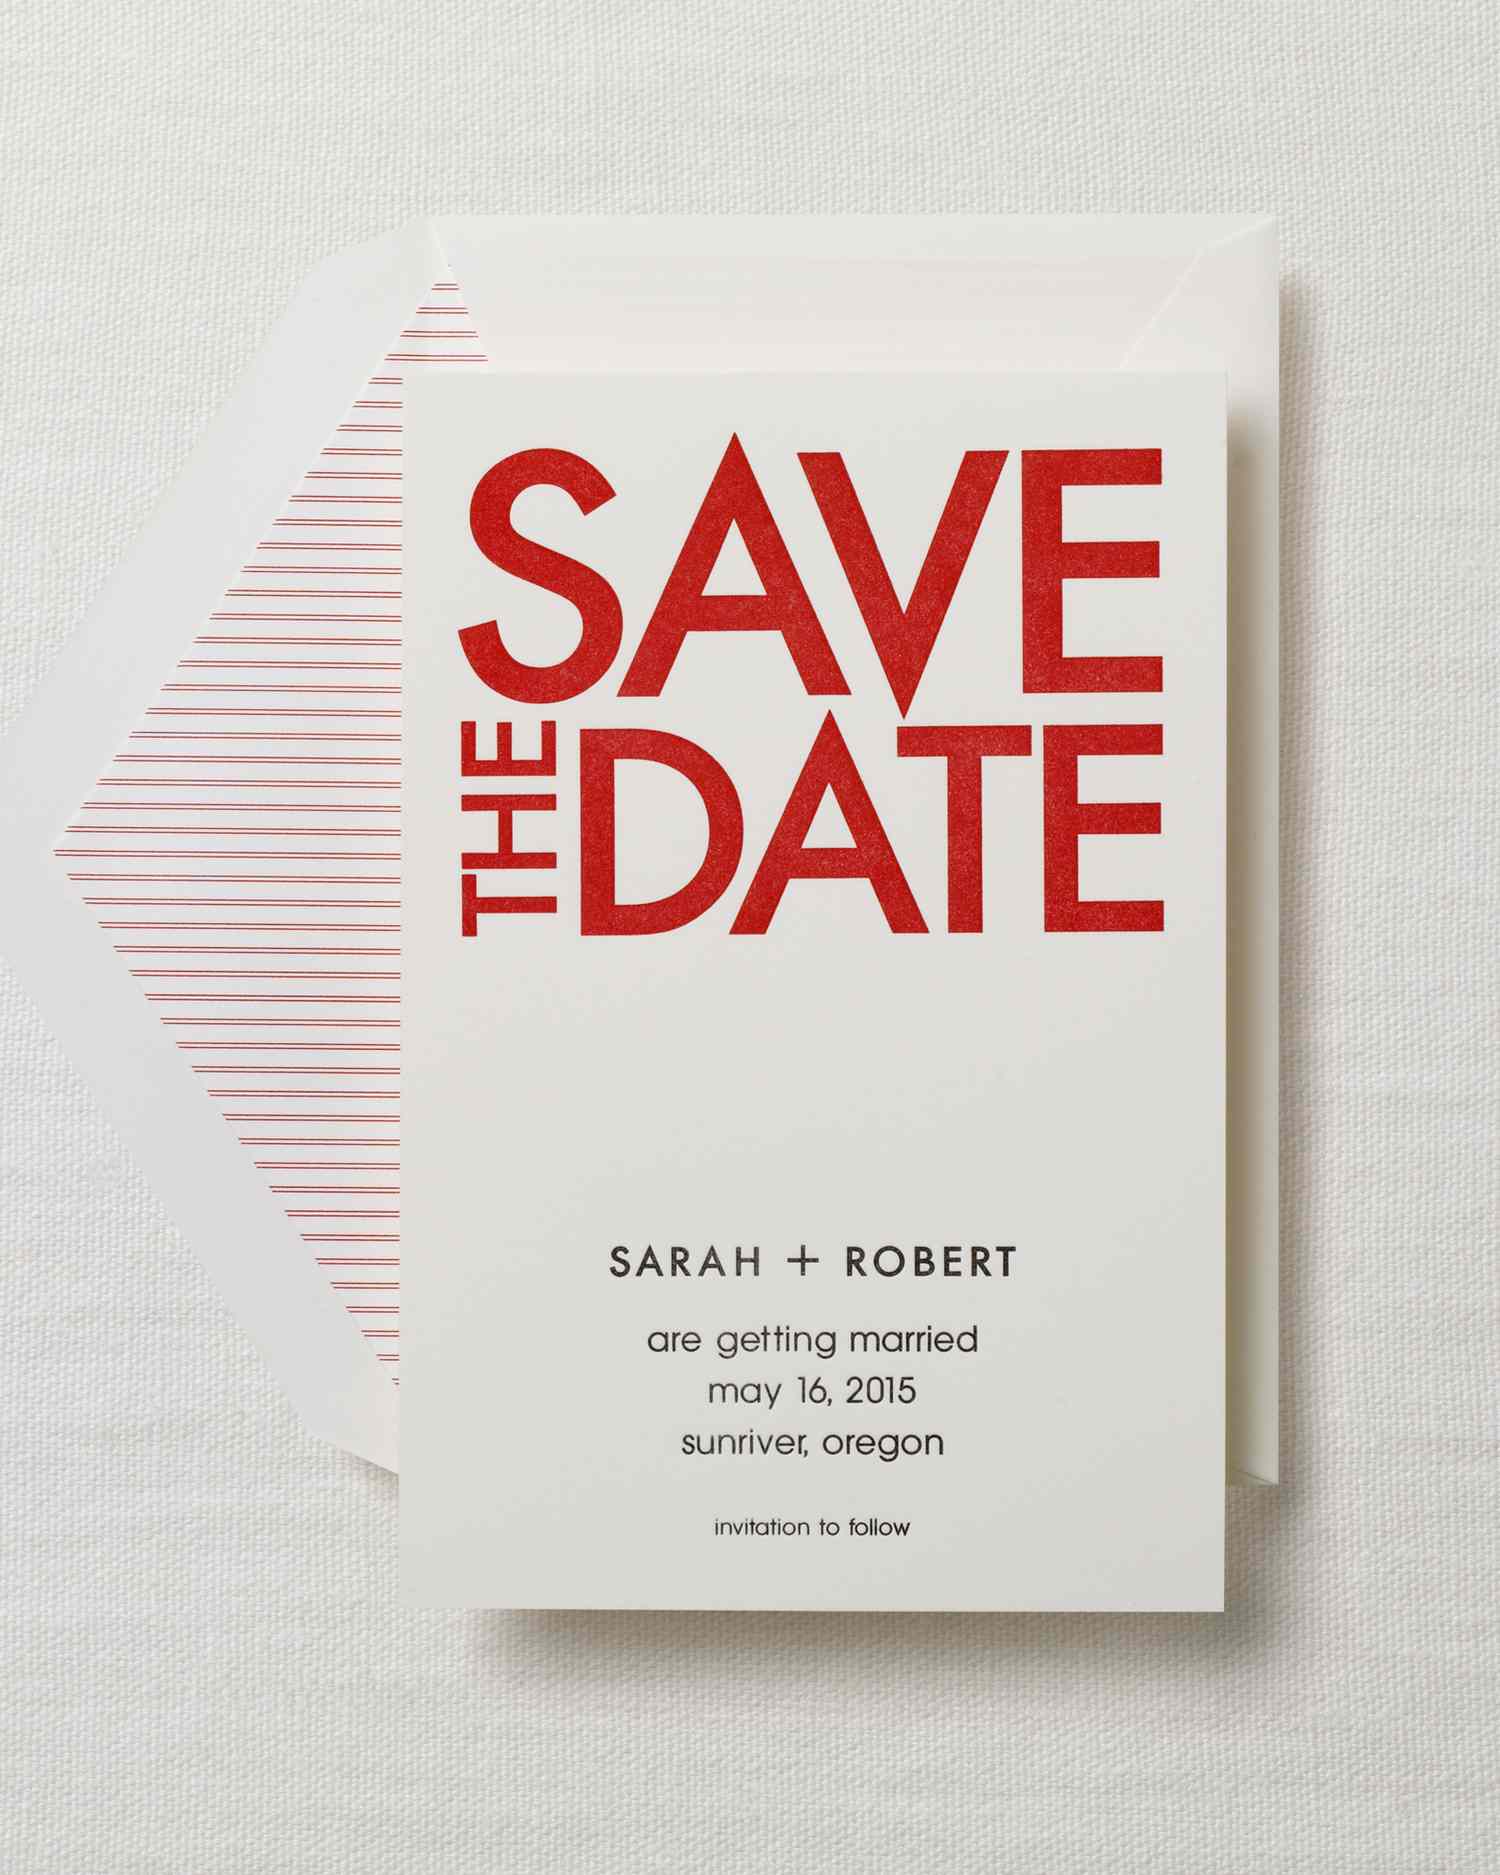 Send Save-the-Dates